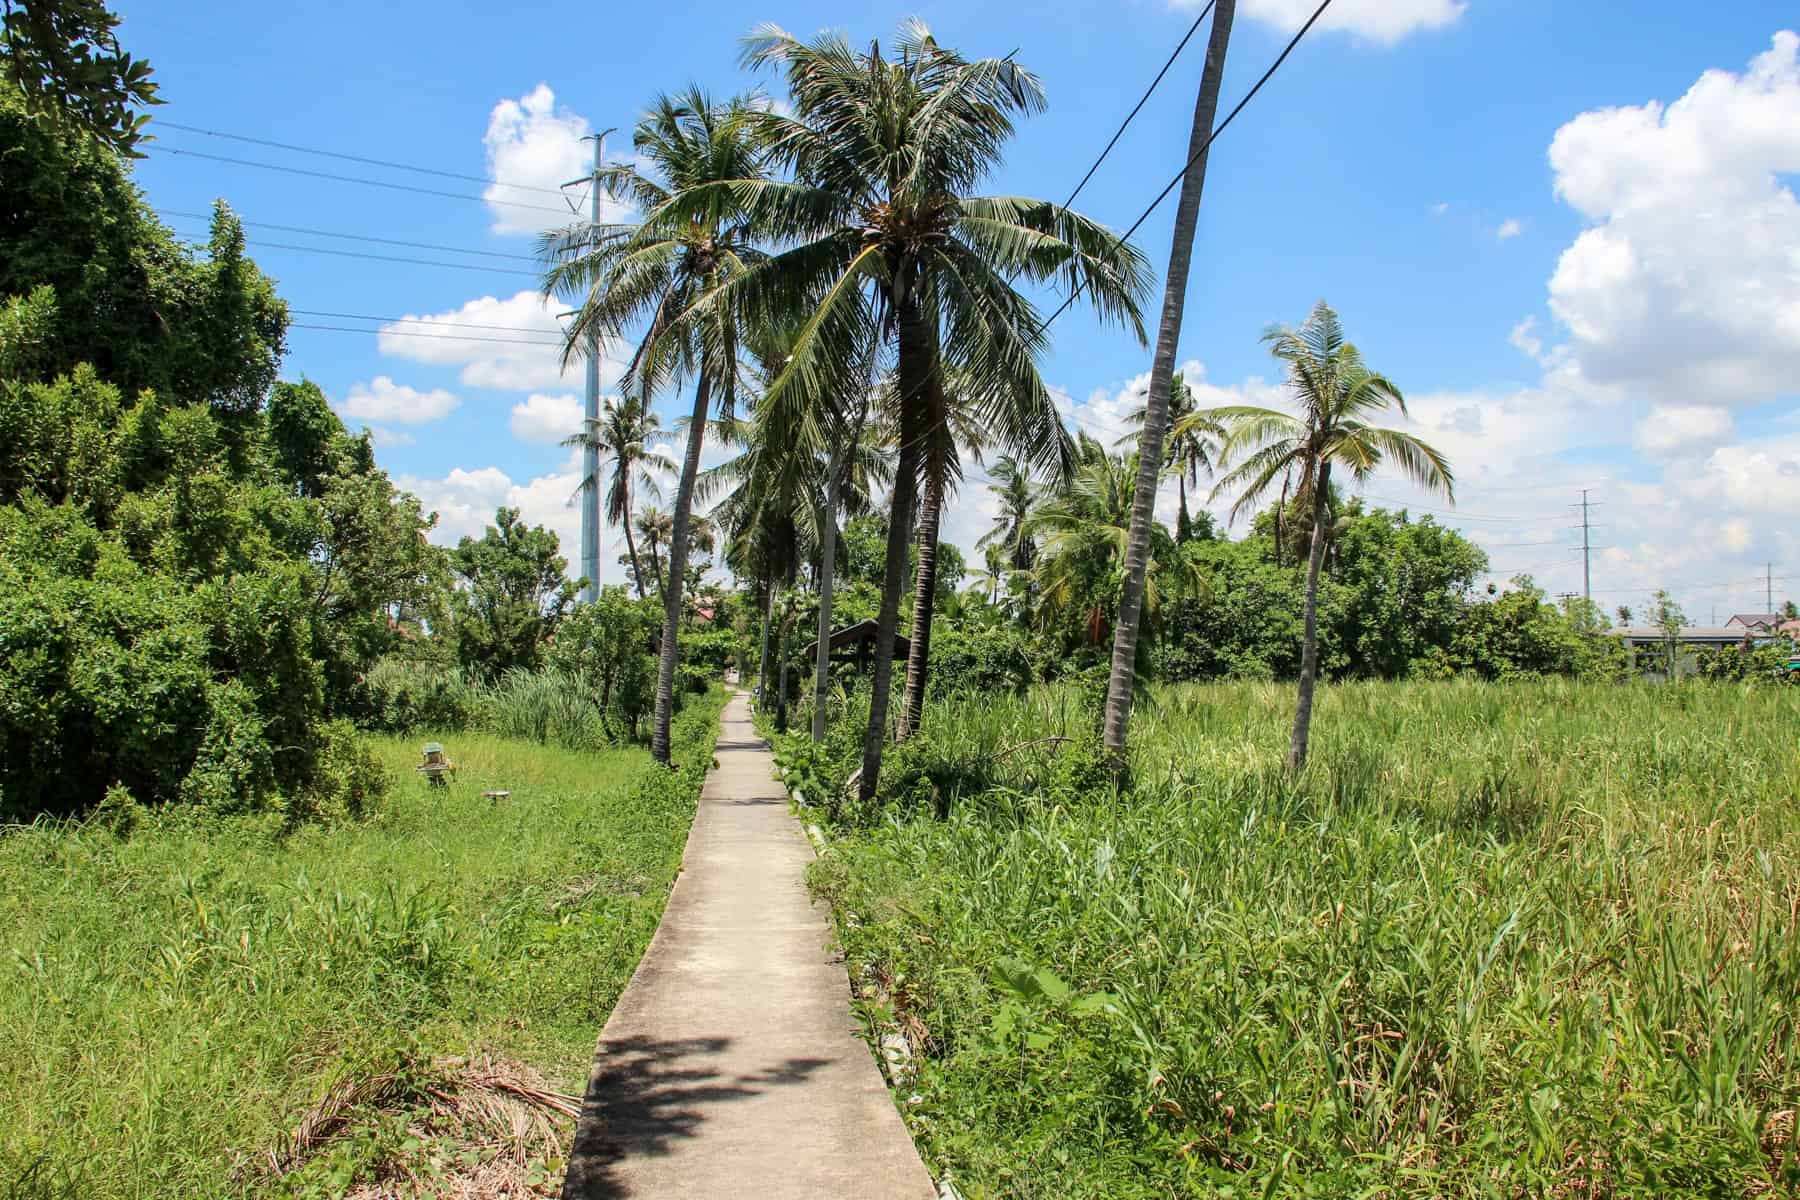 A long paved path cuts through bright green Bangkok countryside towards palm trees